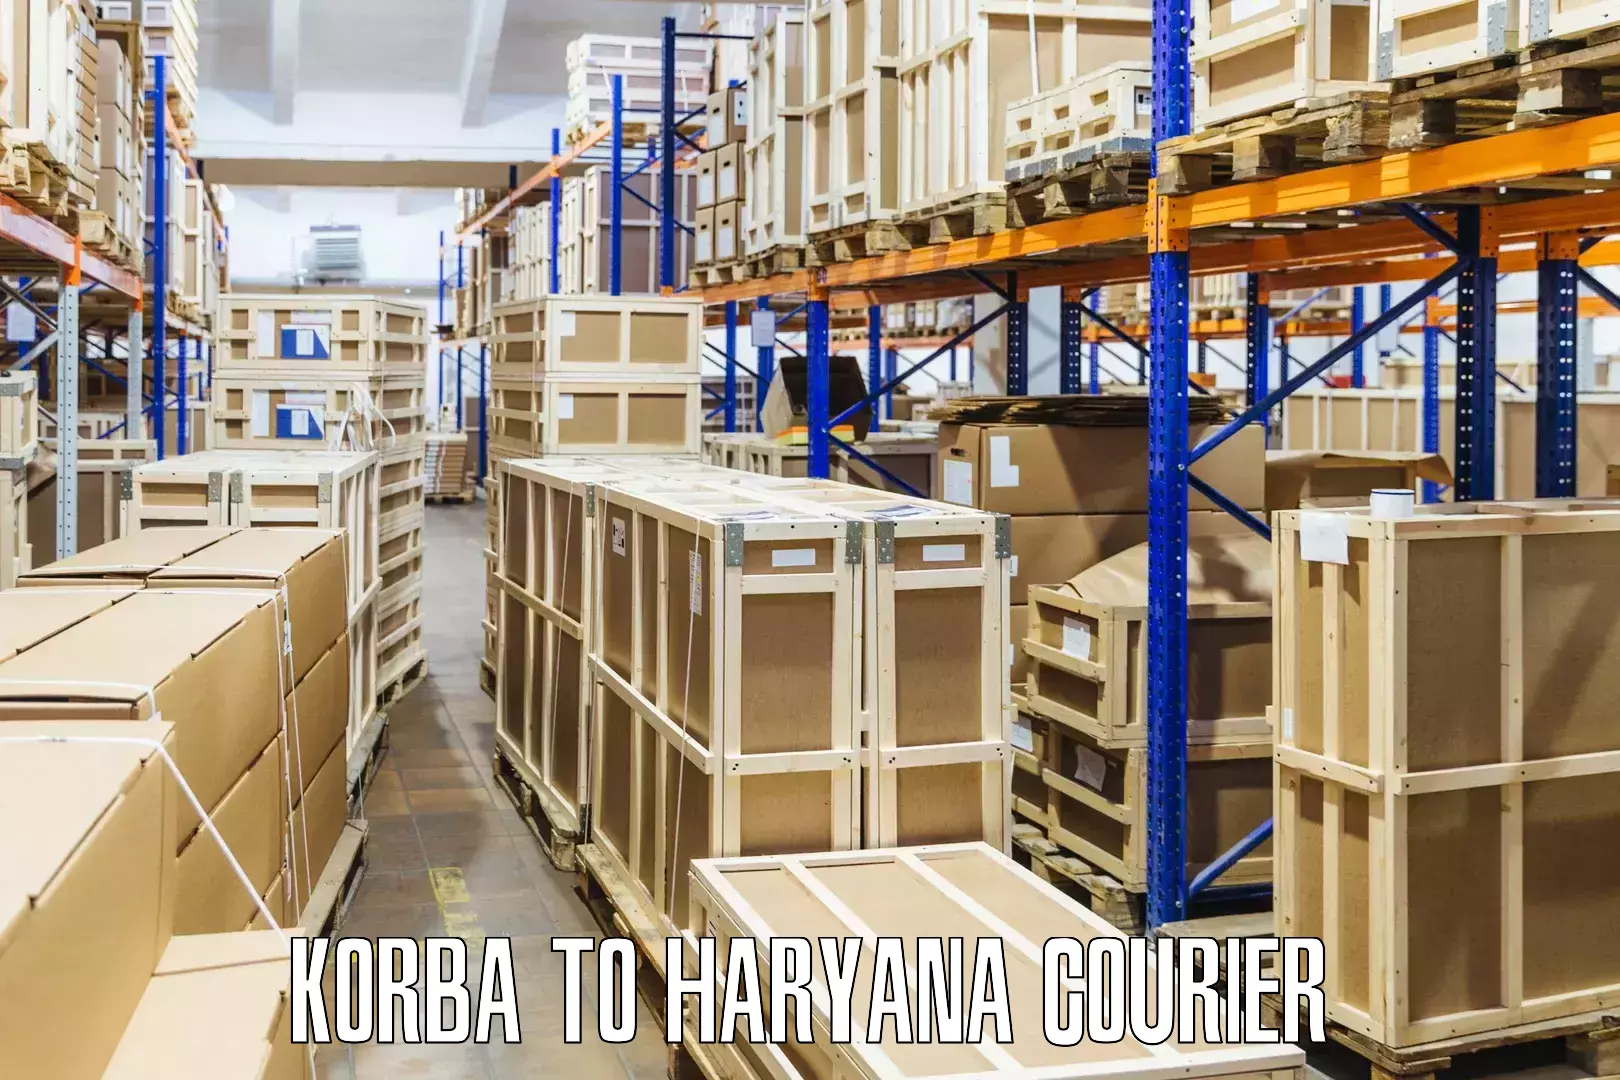 Advanced courier platforms Korba to Gurgaon